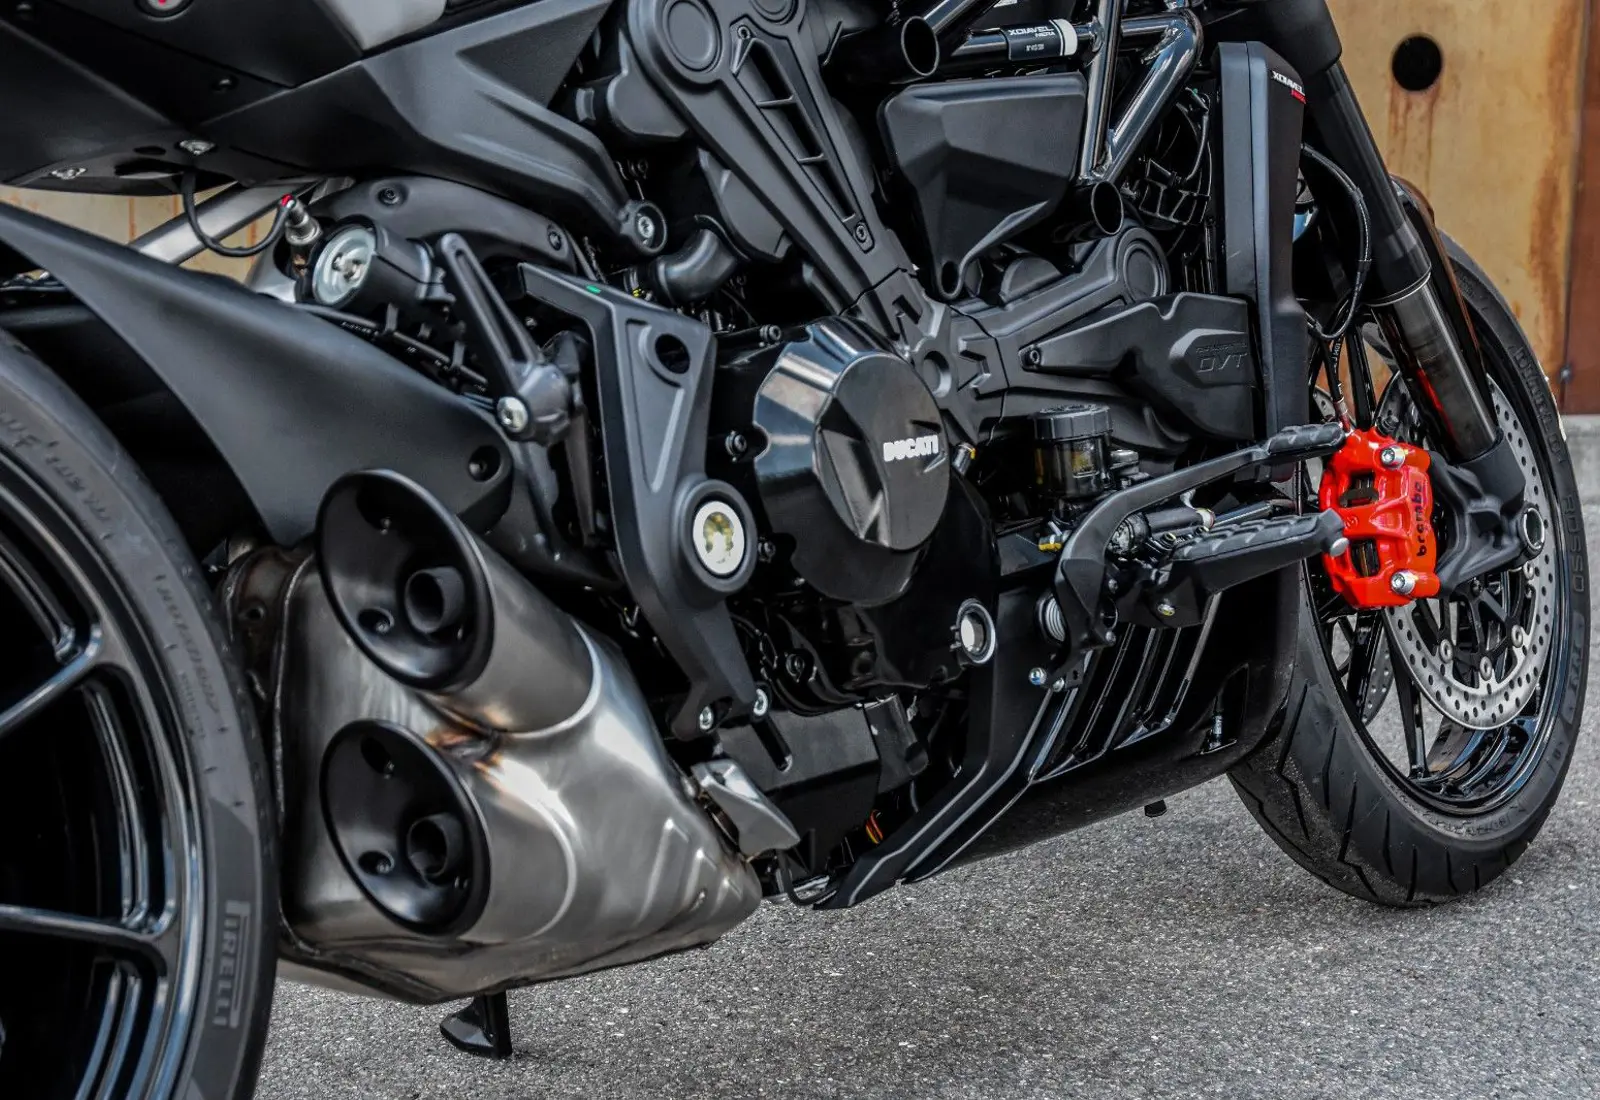 Ducati X-Diavel Nera * POLTRONA FRAU * 1 OF 500 * LIMITED ED - 41980